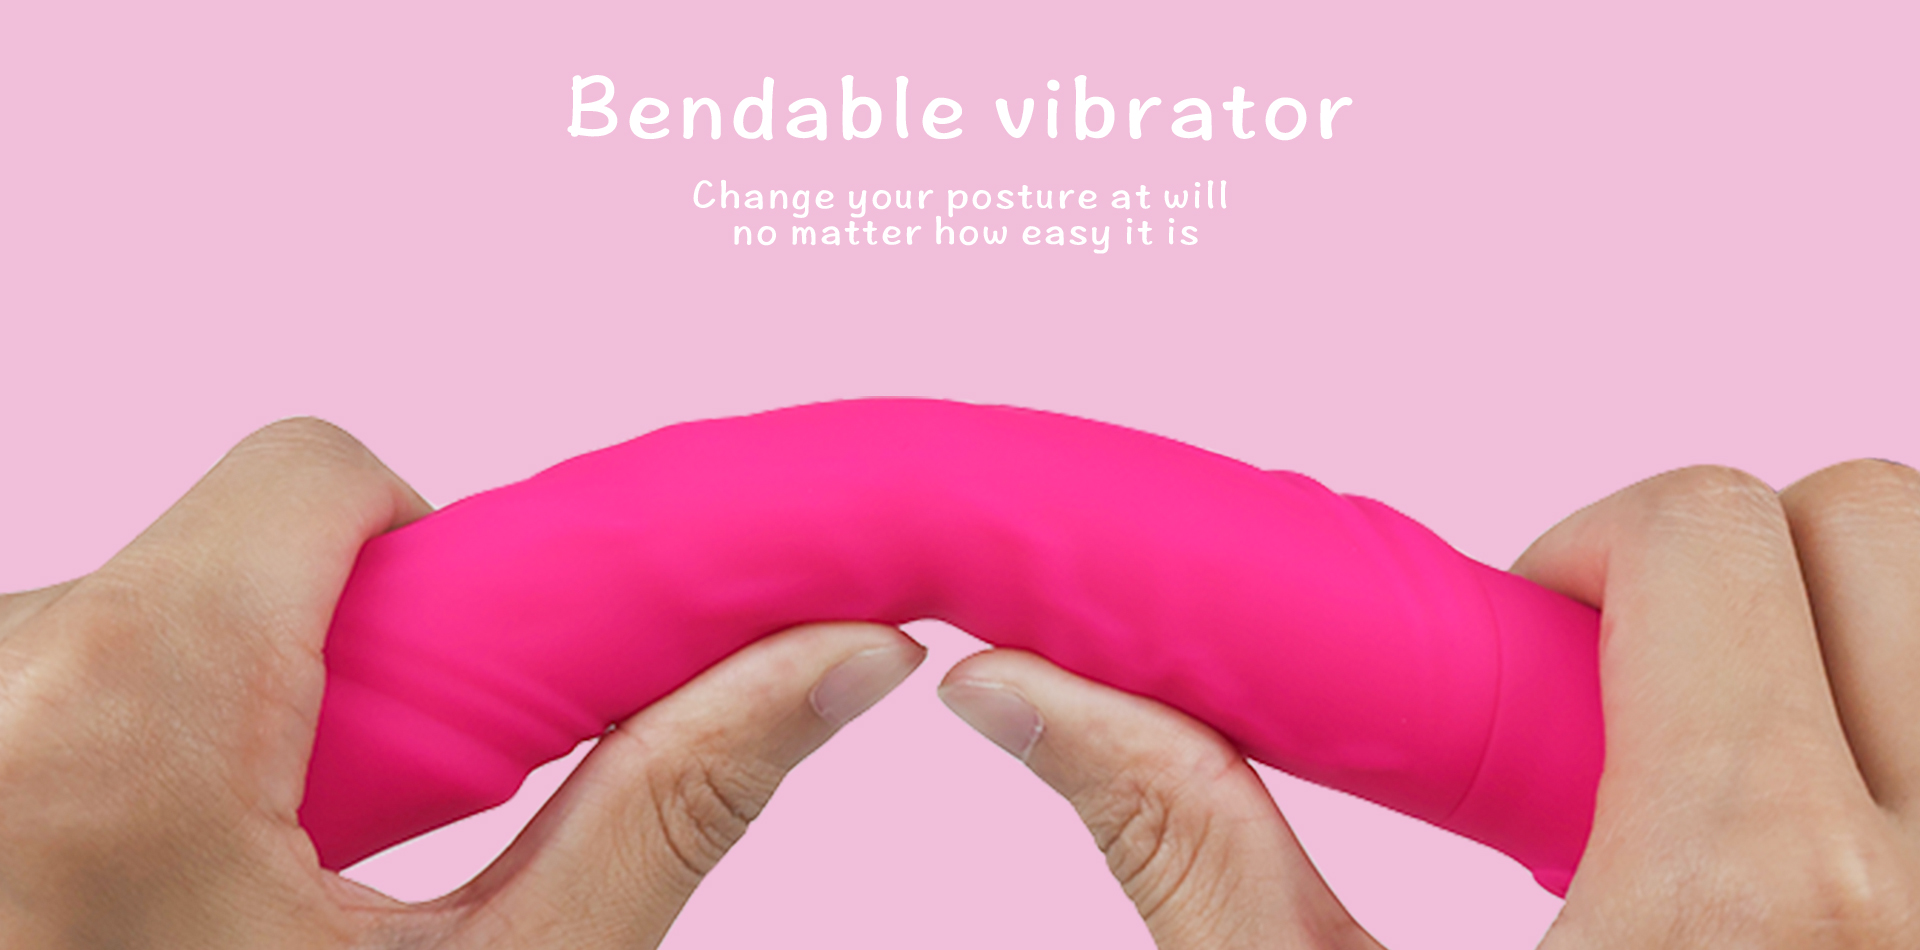 3.Bendable vibrator.jpg